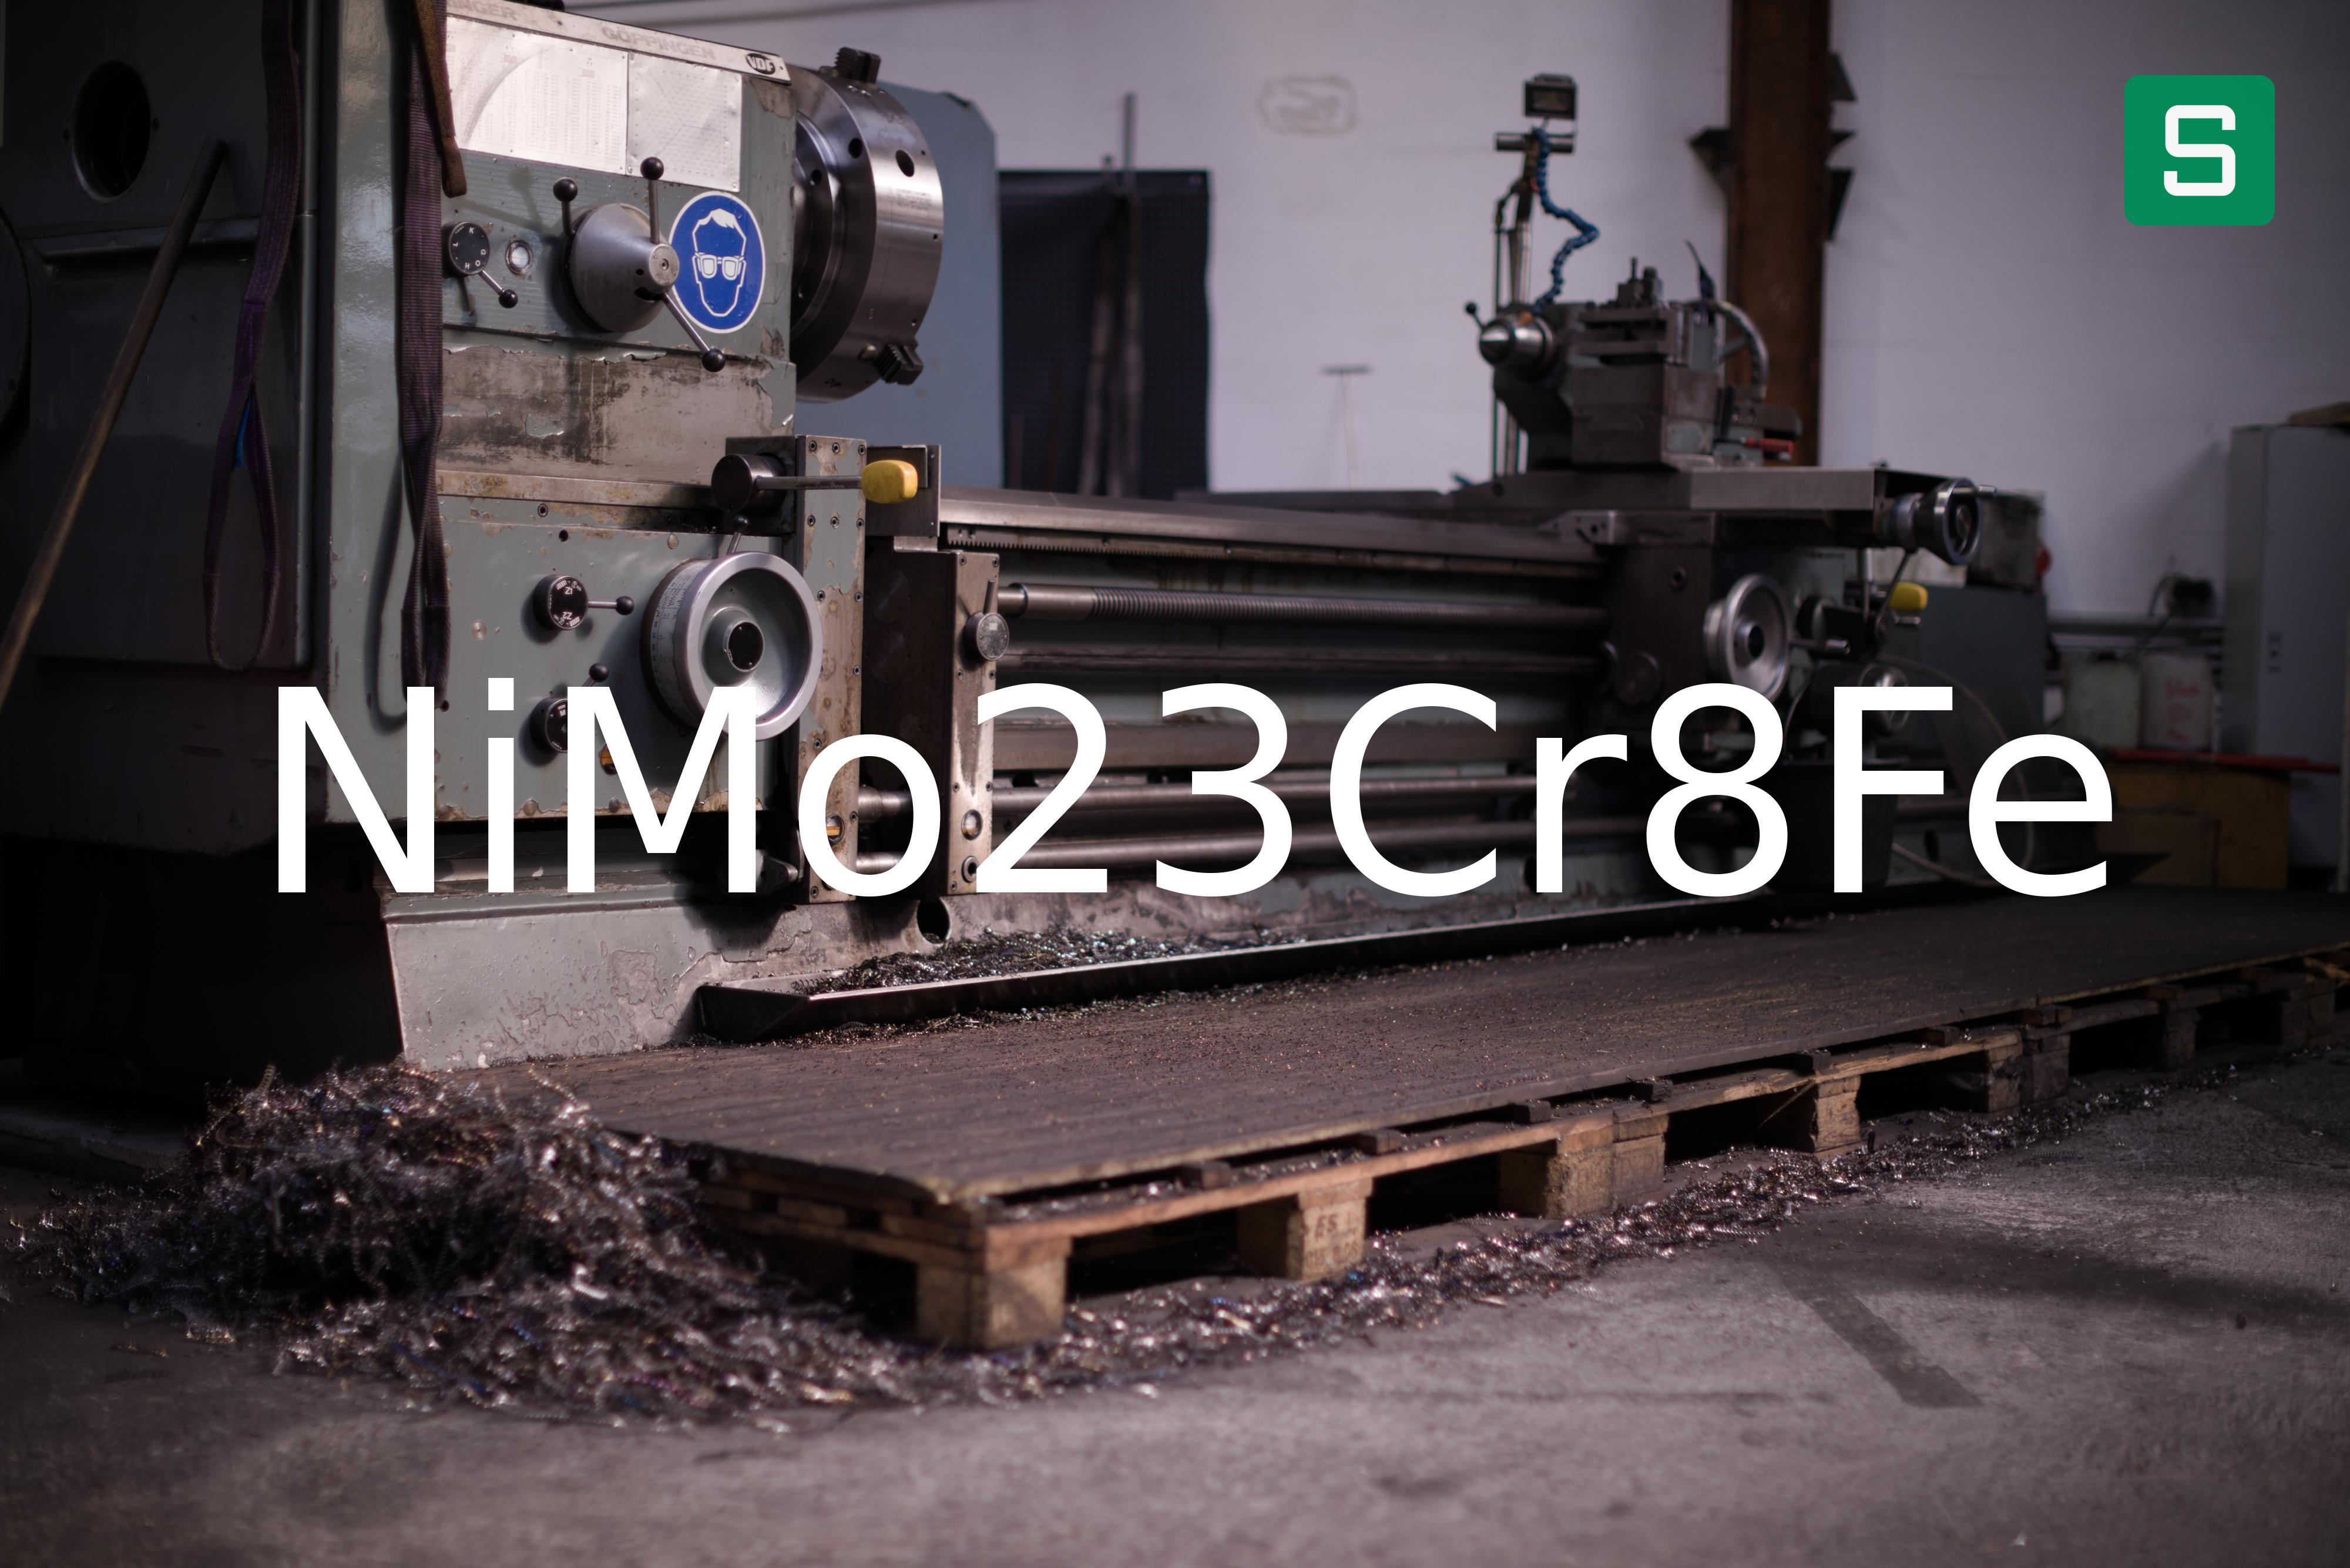 Steel Material: NiMo23Cr8Fe